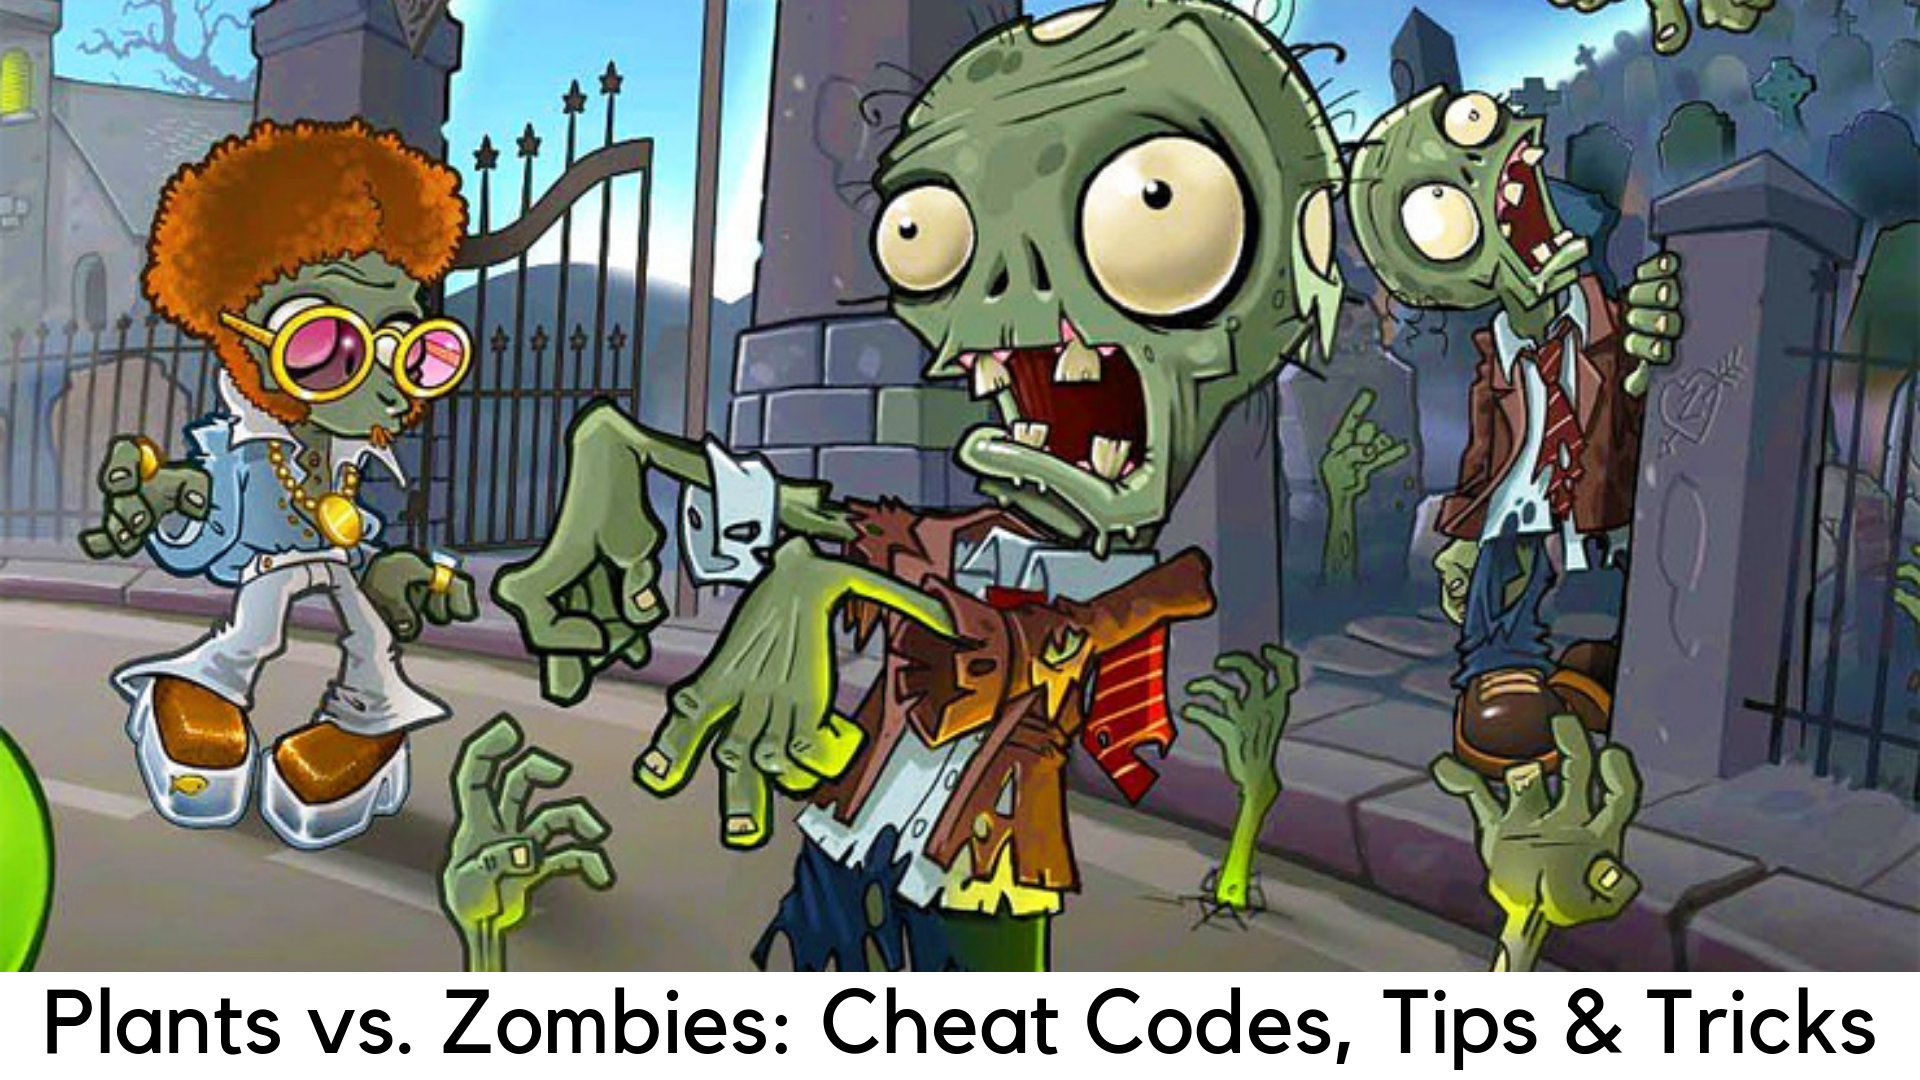 Plants zombies cheats. Plants vs Zombies игра за зомби. Растения против зомби мультик. Растения против зомби Зомбатар. Растения против зомби подтанцовщик.